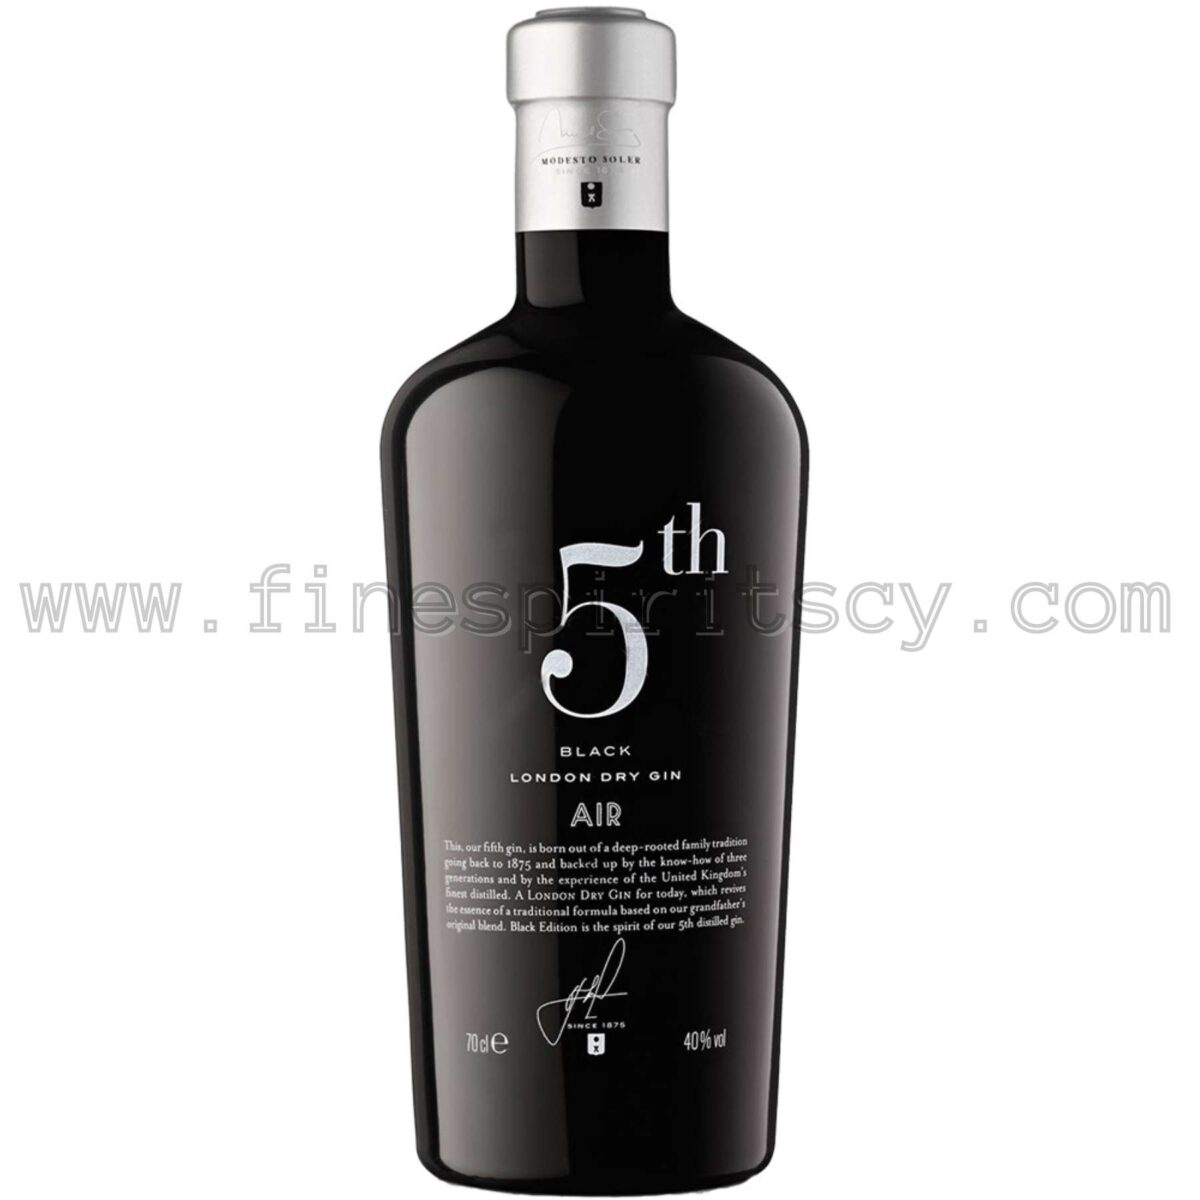 5th Distilled Gin Black Air Cyprus Price Online 700ml 70cl 0.7L FSCY